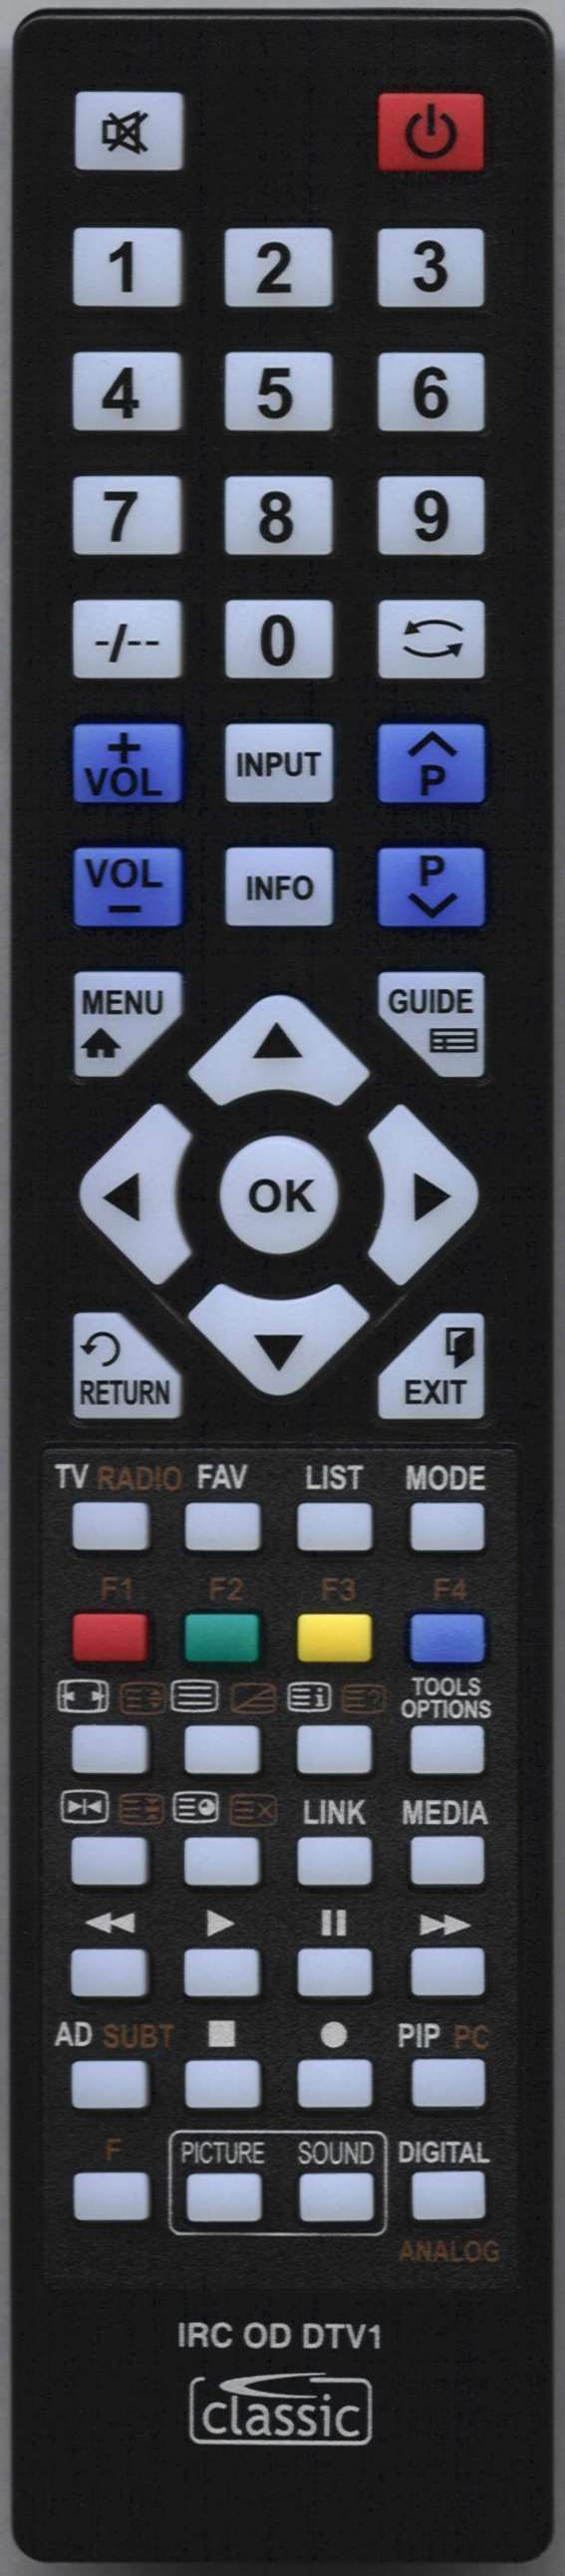 JVC RM-C 1981 Remote Control